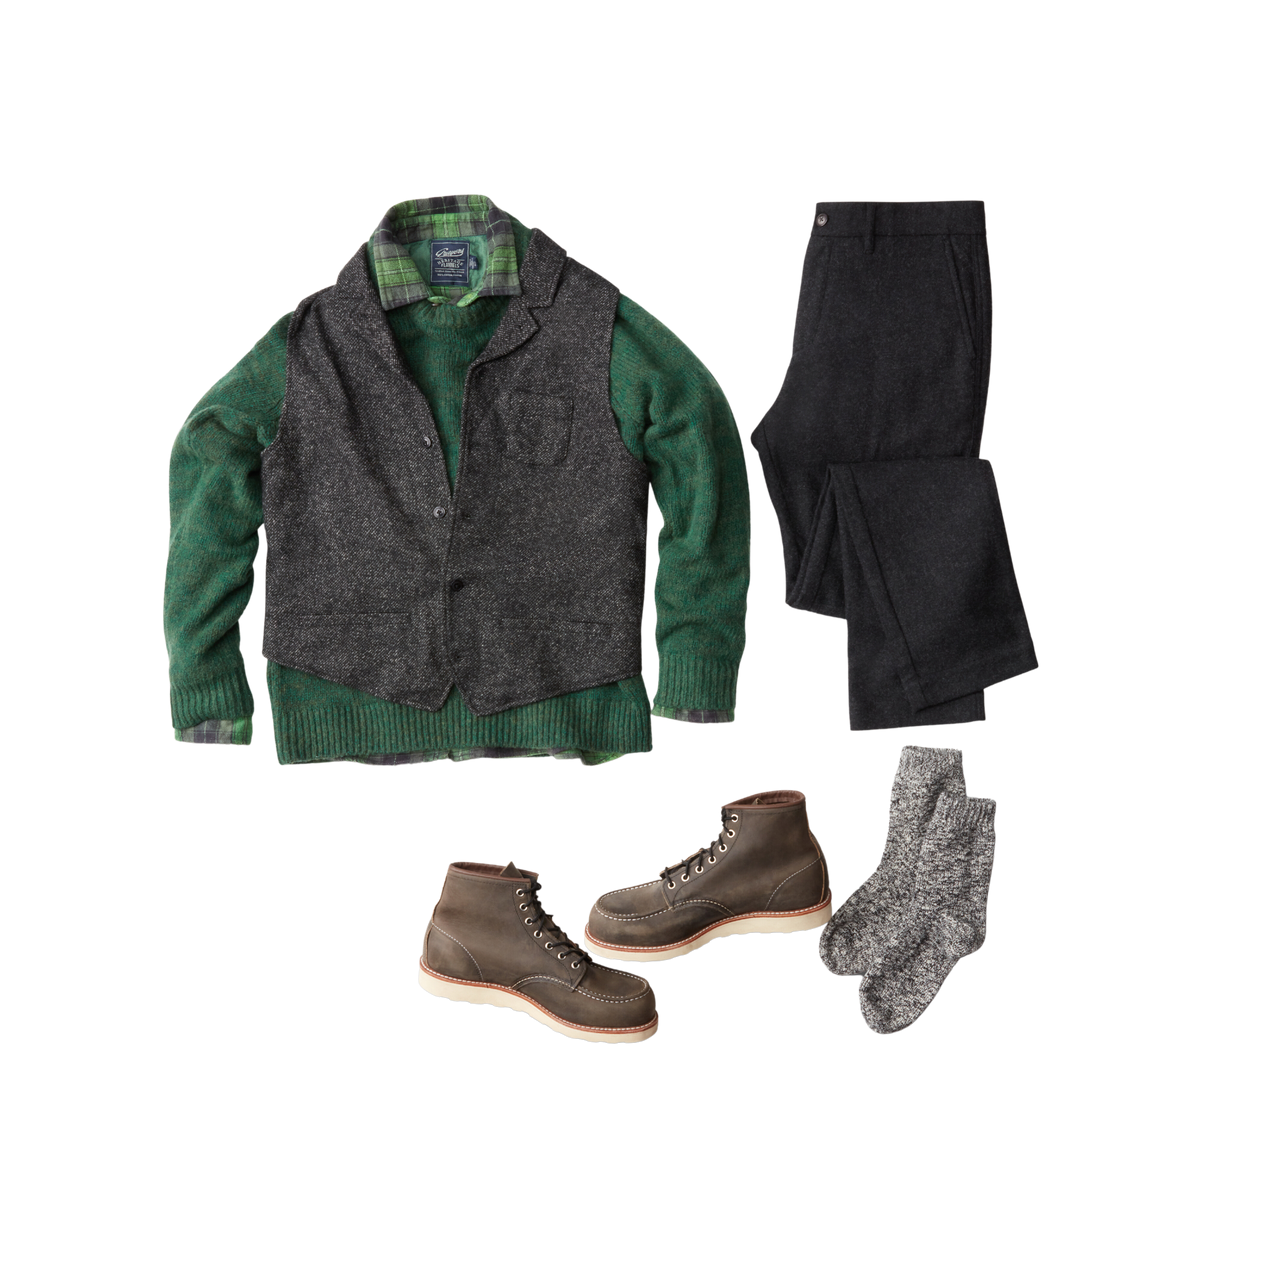 Image of shirt, T-shirt,over coat, shoe,socks and pants